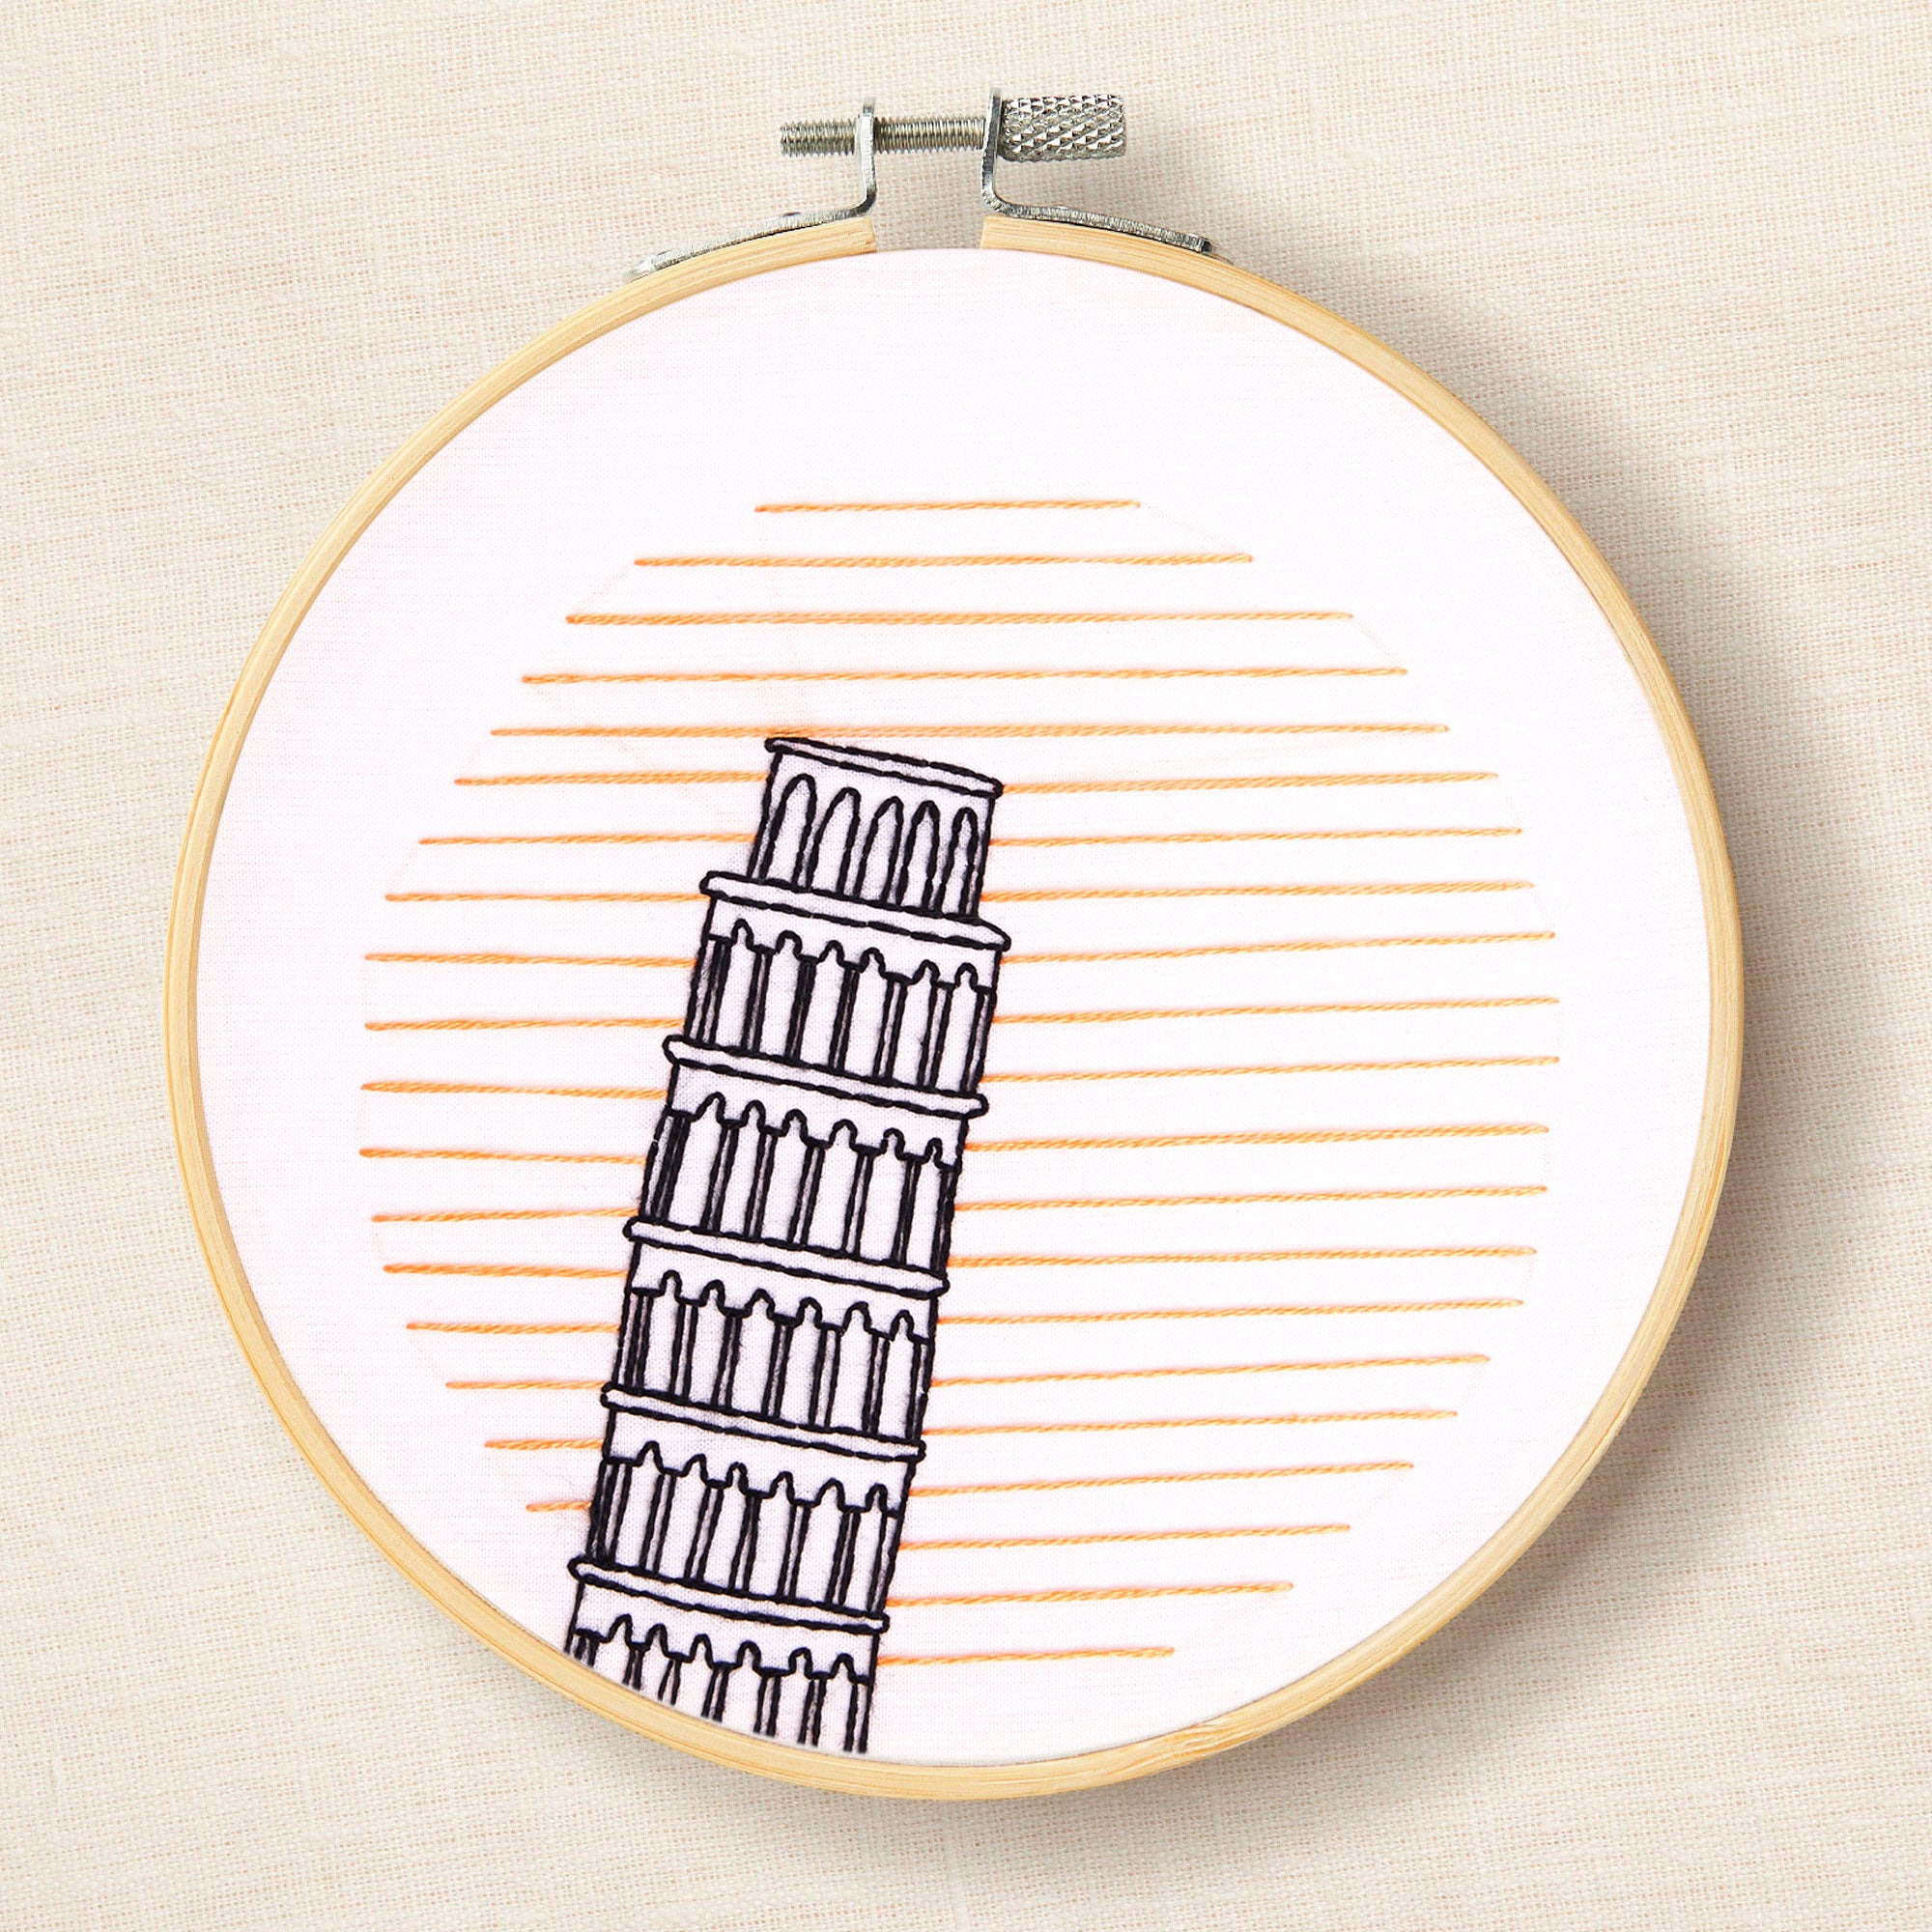 DMC Pisa by Kseniia Guseva (Embroidery Kit)